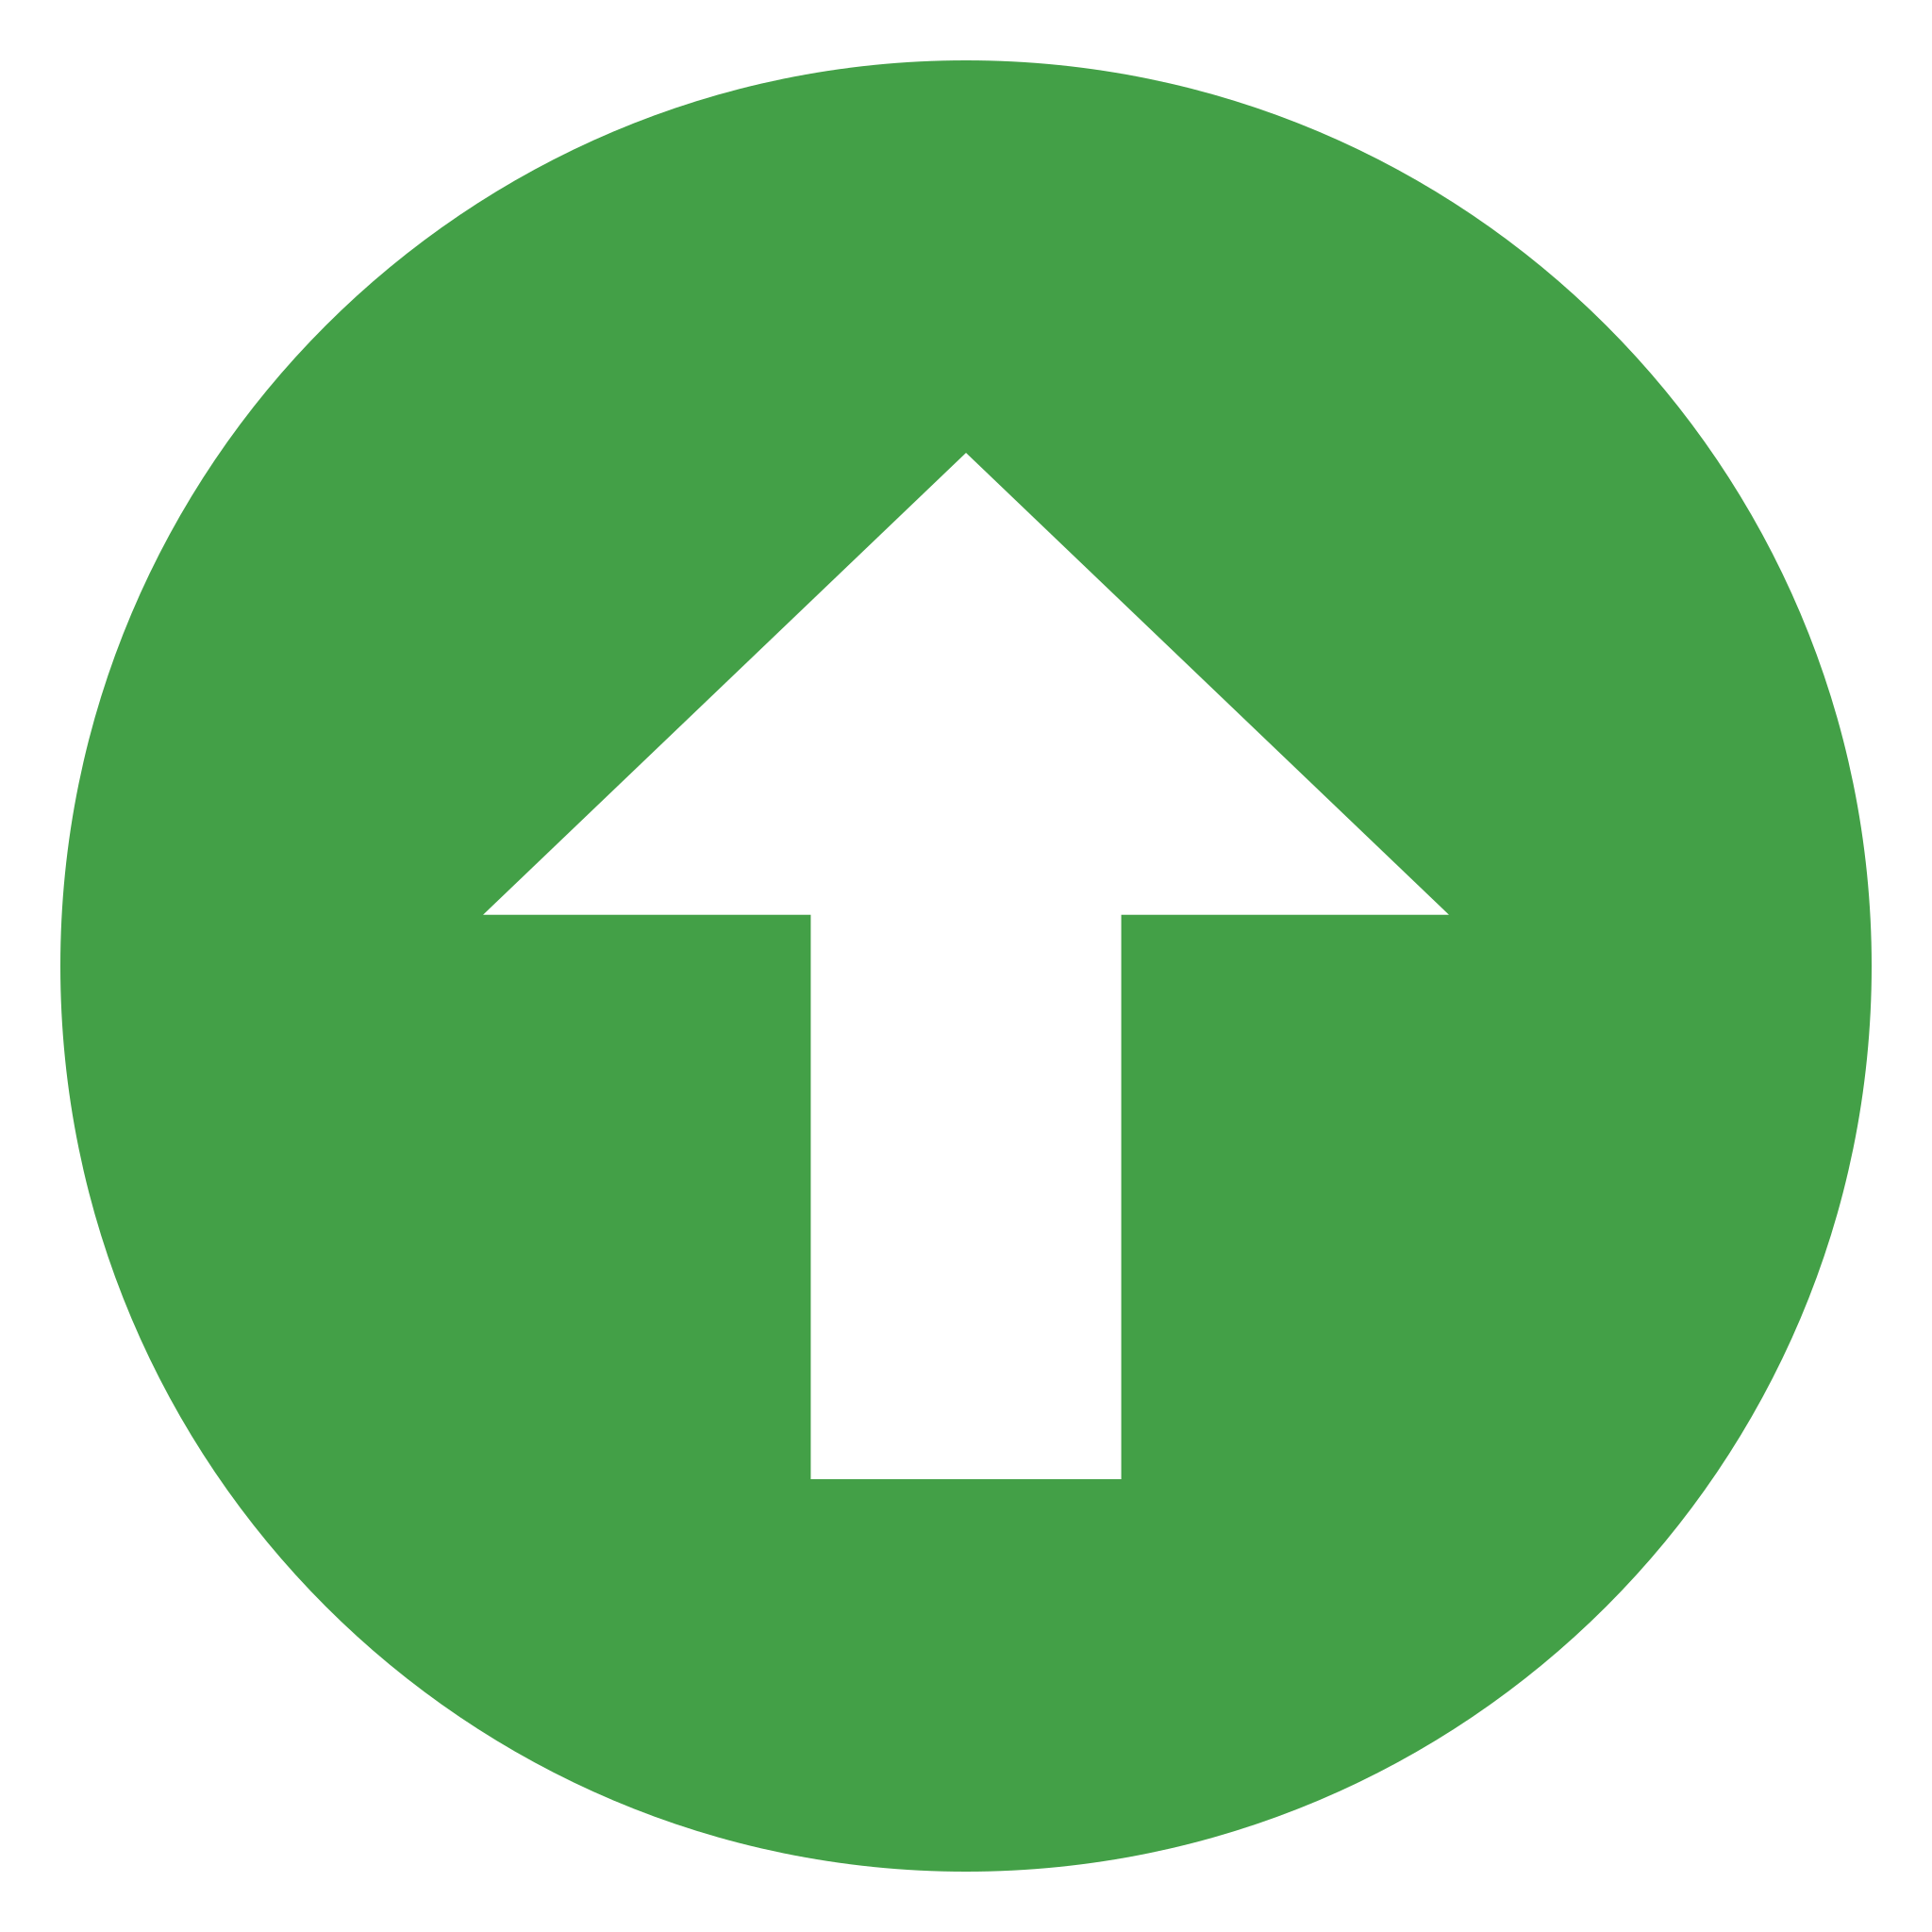 Fileeo Circle Green Arrow Upsvg Wikimedia Commons